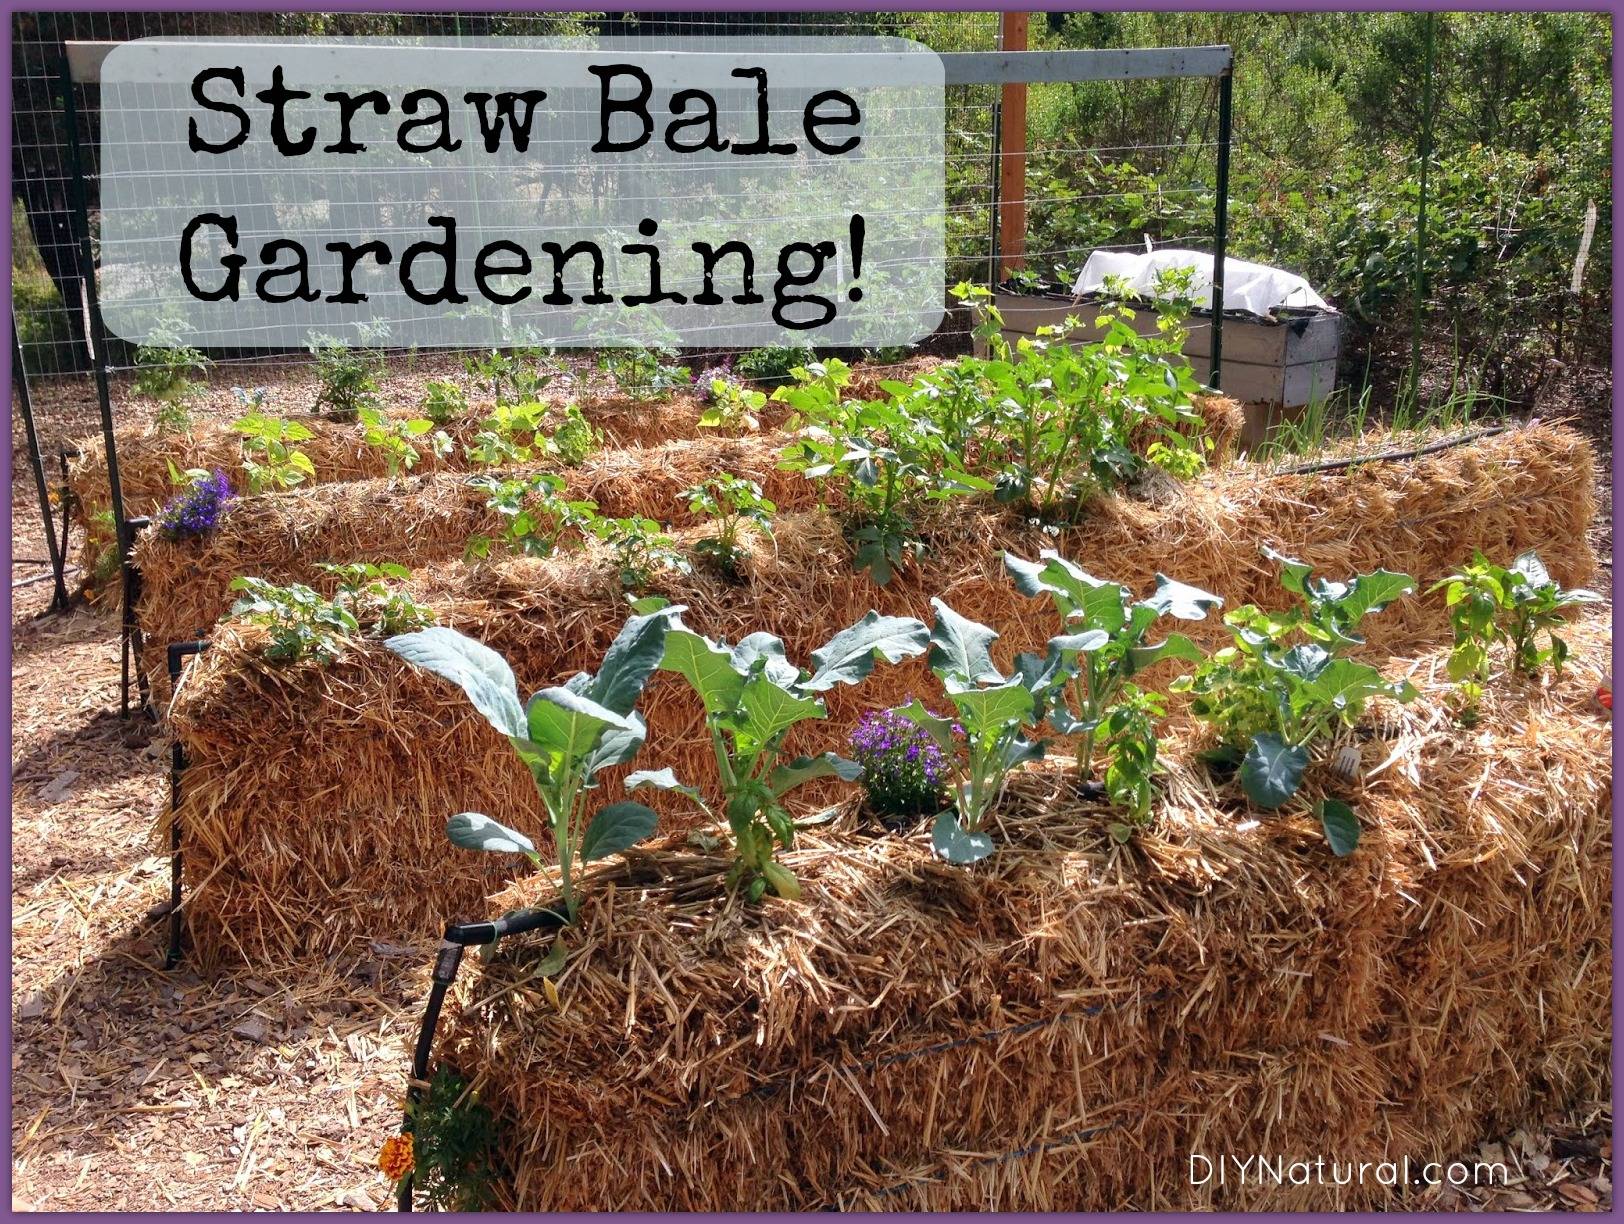 Straw Bale Garden Garden Tips